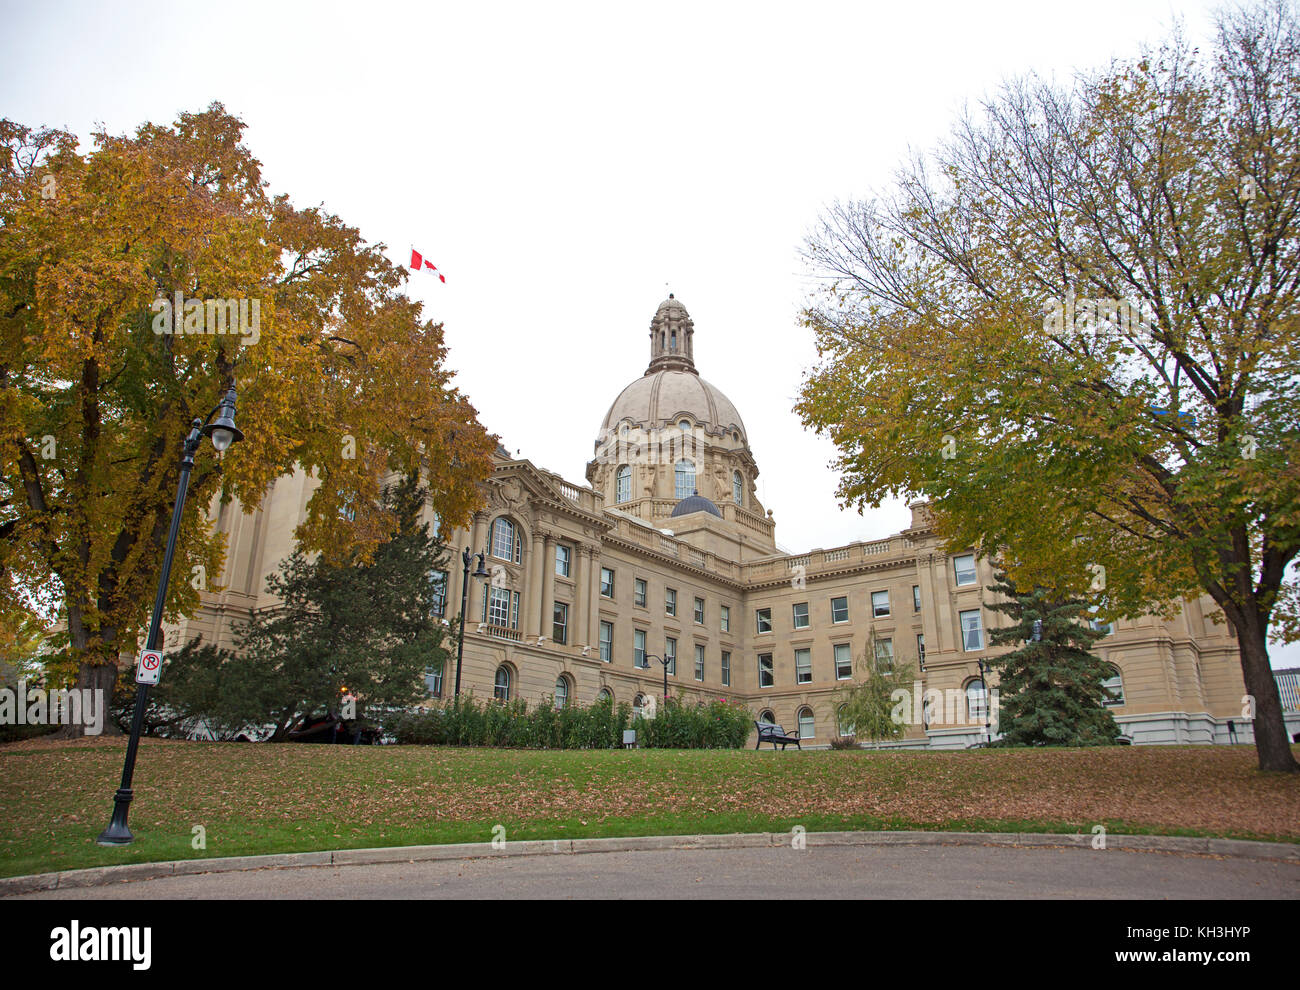 on October 6, 2017: the edmonton legislature building in autumn colored spendor Stock Photo